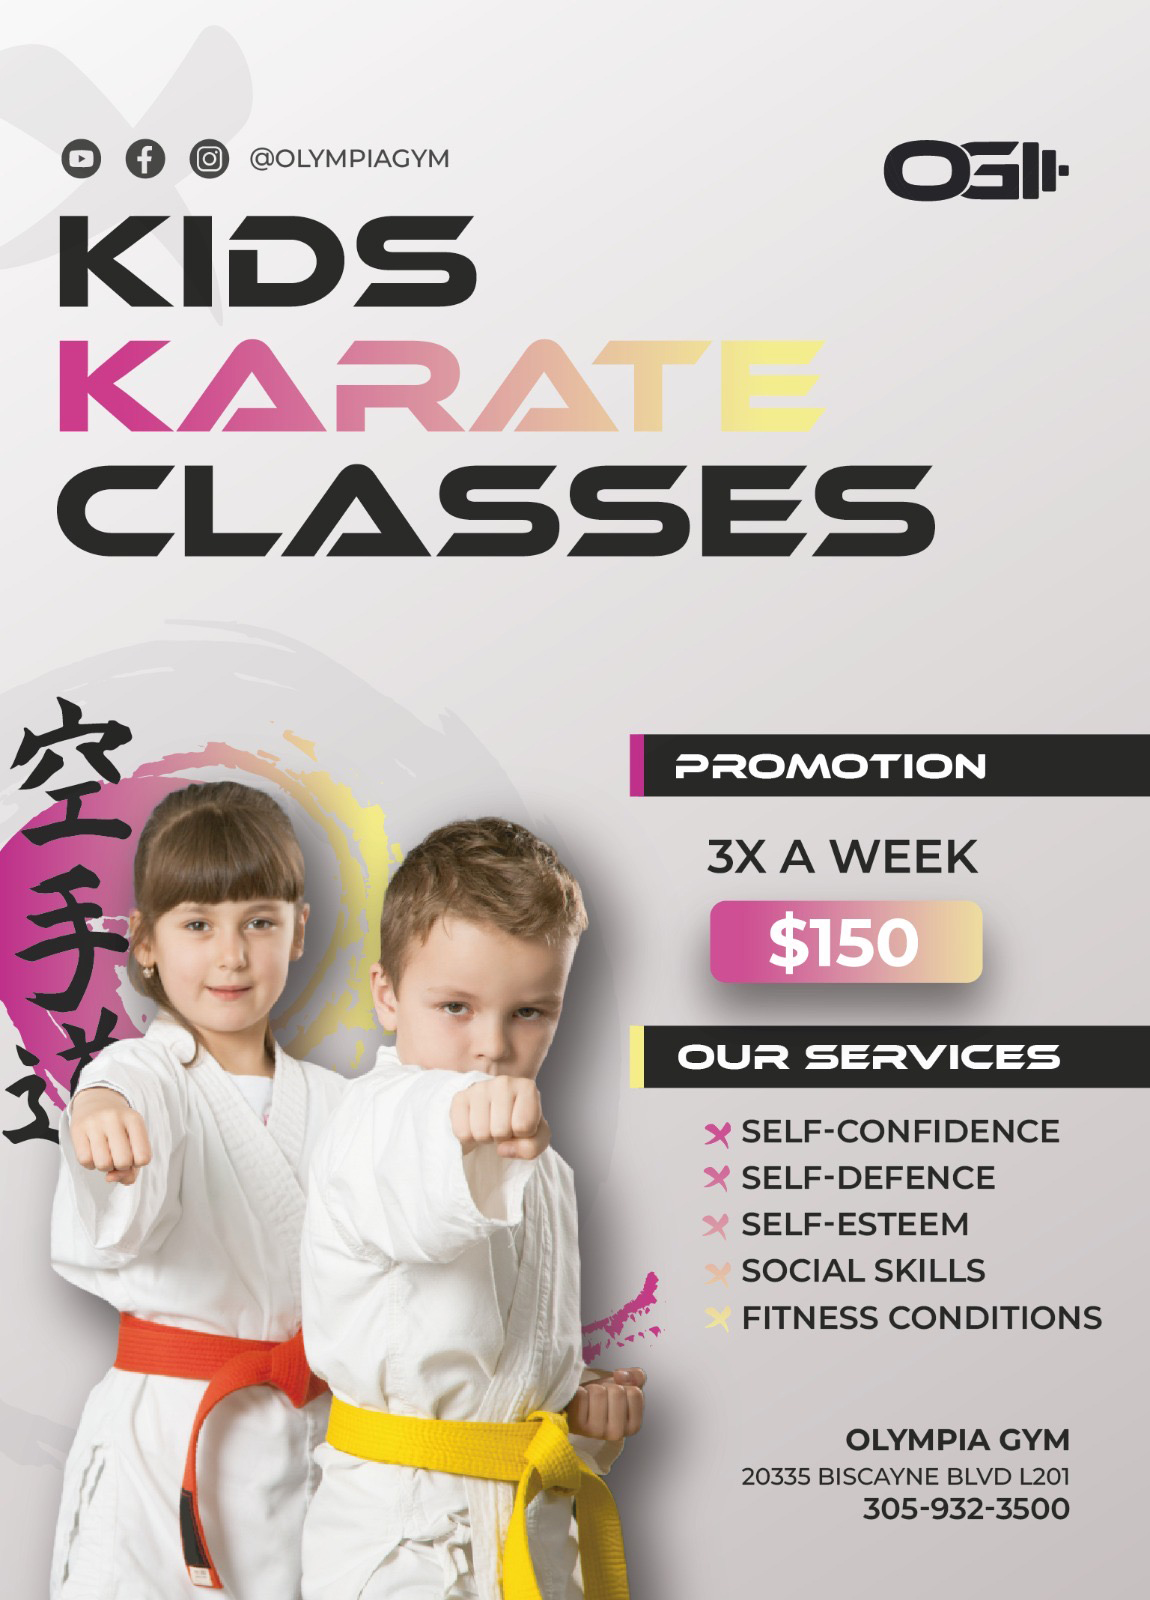 Olympia Gym - Kids Karate Classes